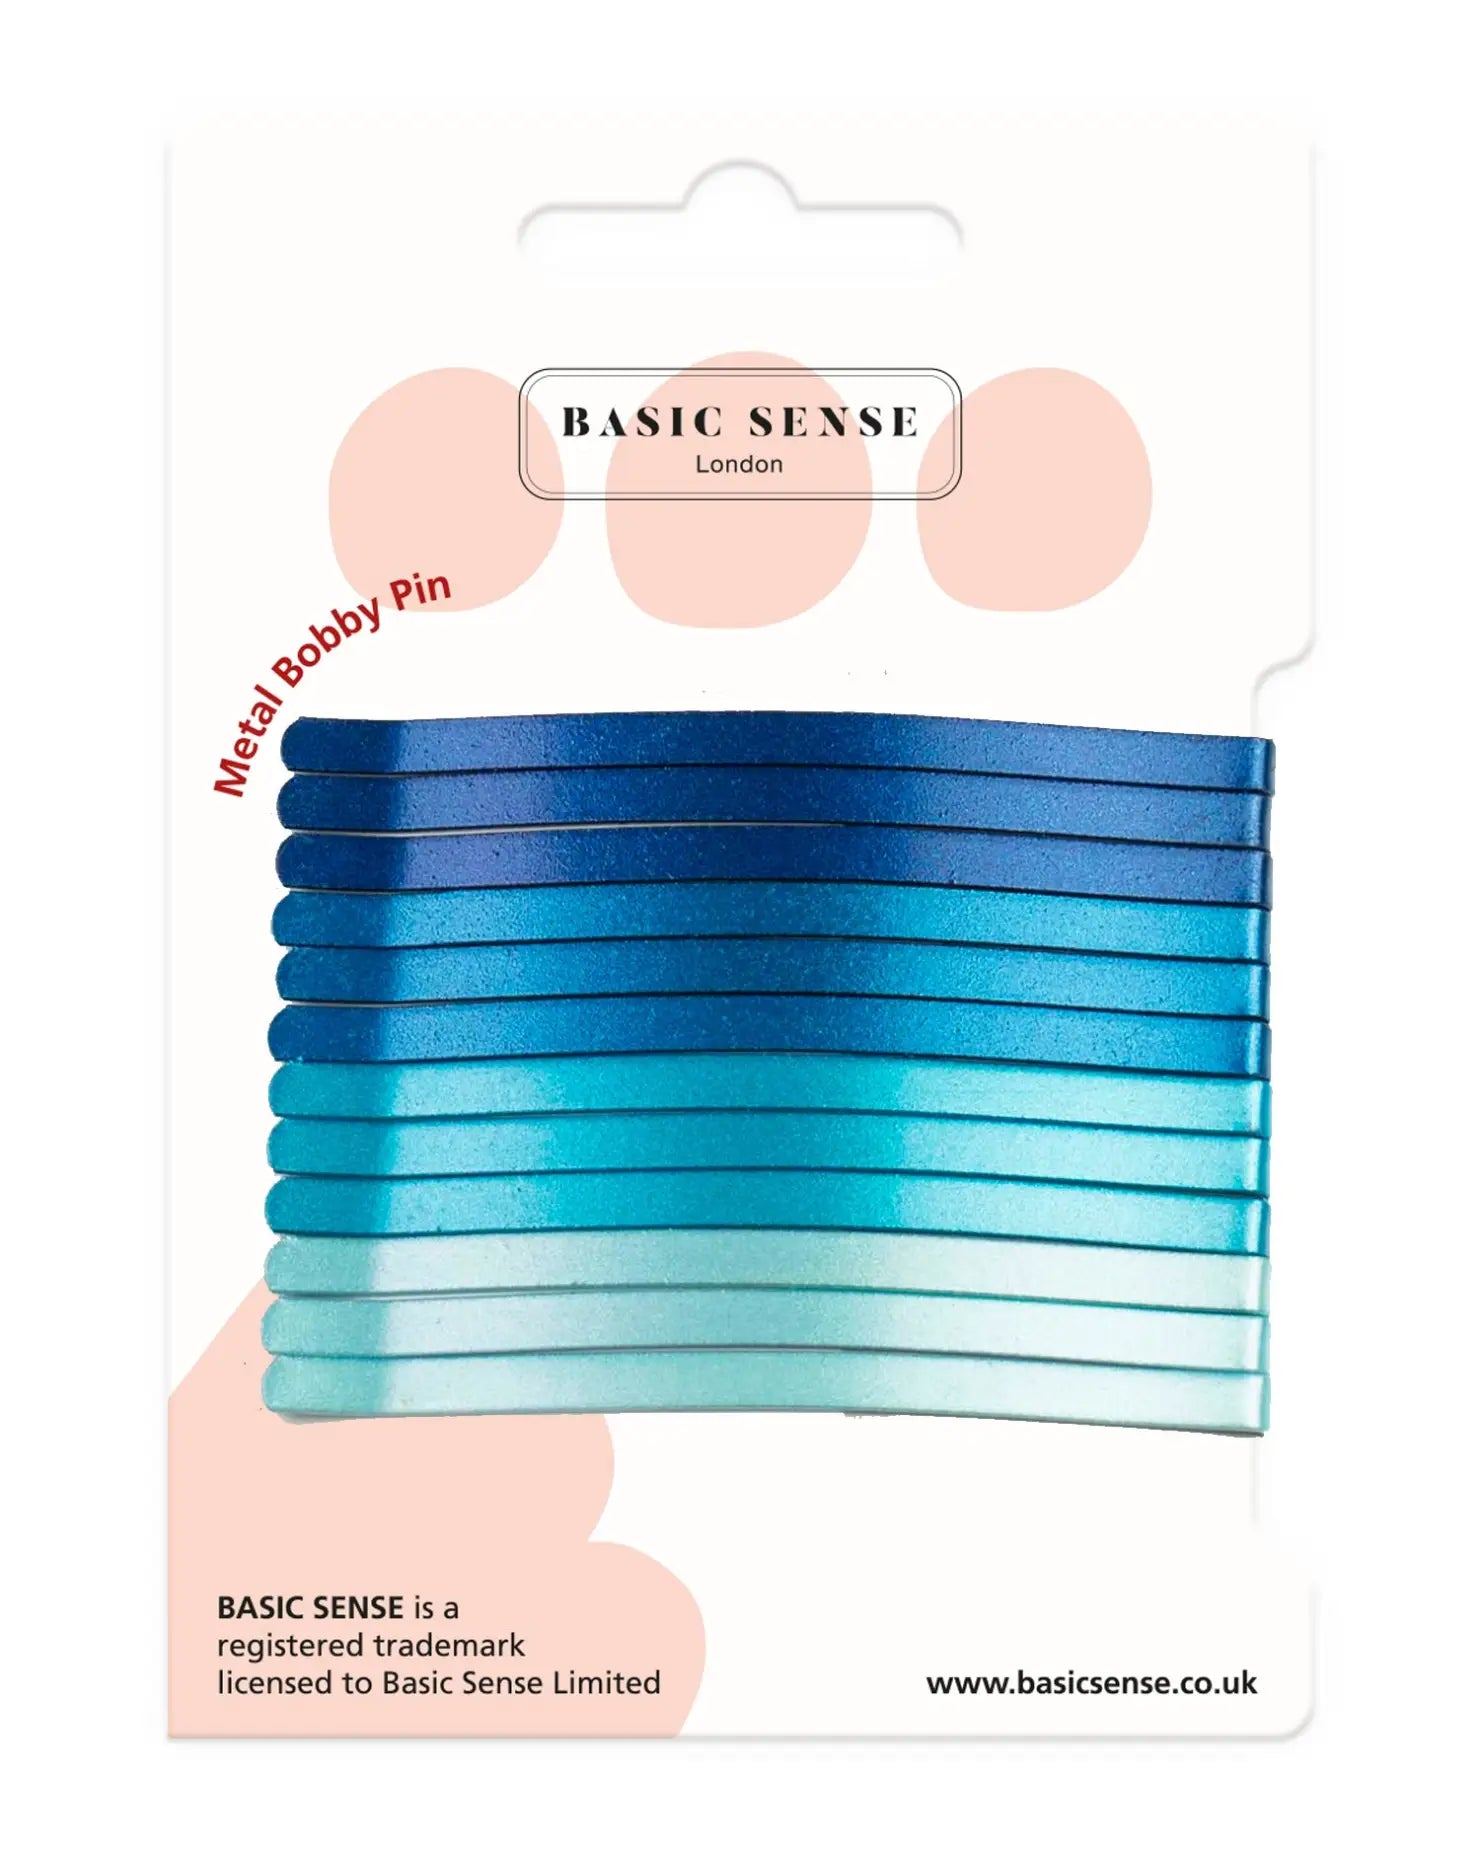 Blue and green hair ties in Jumbo Metal Bobby Pins product display.